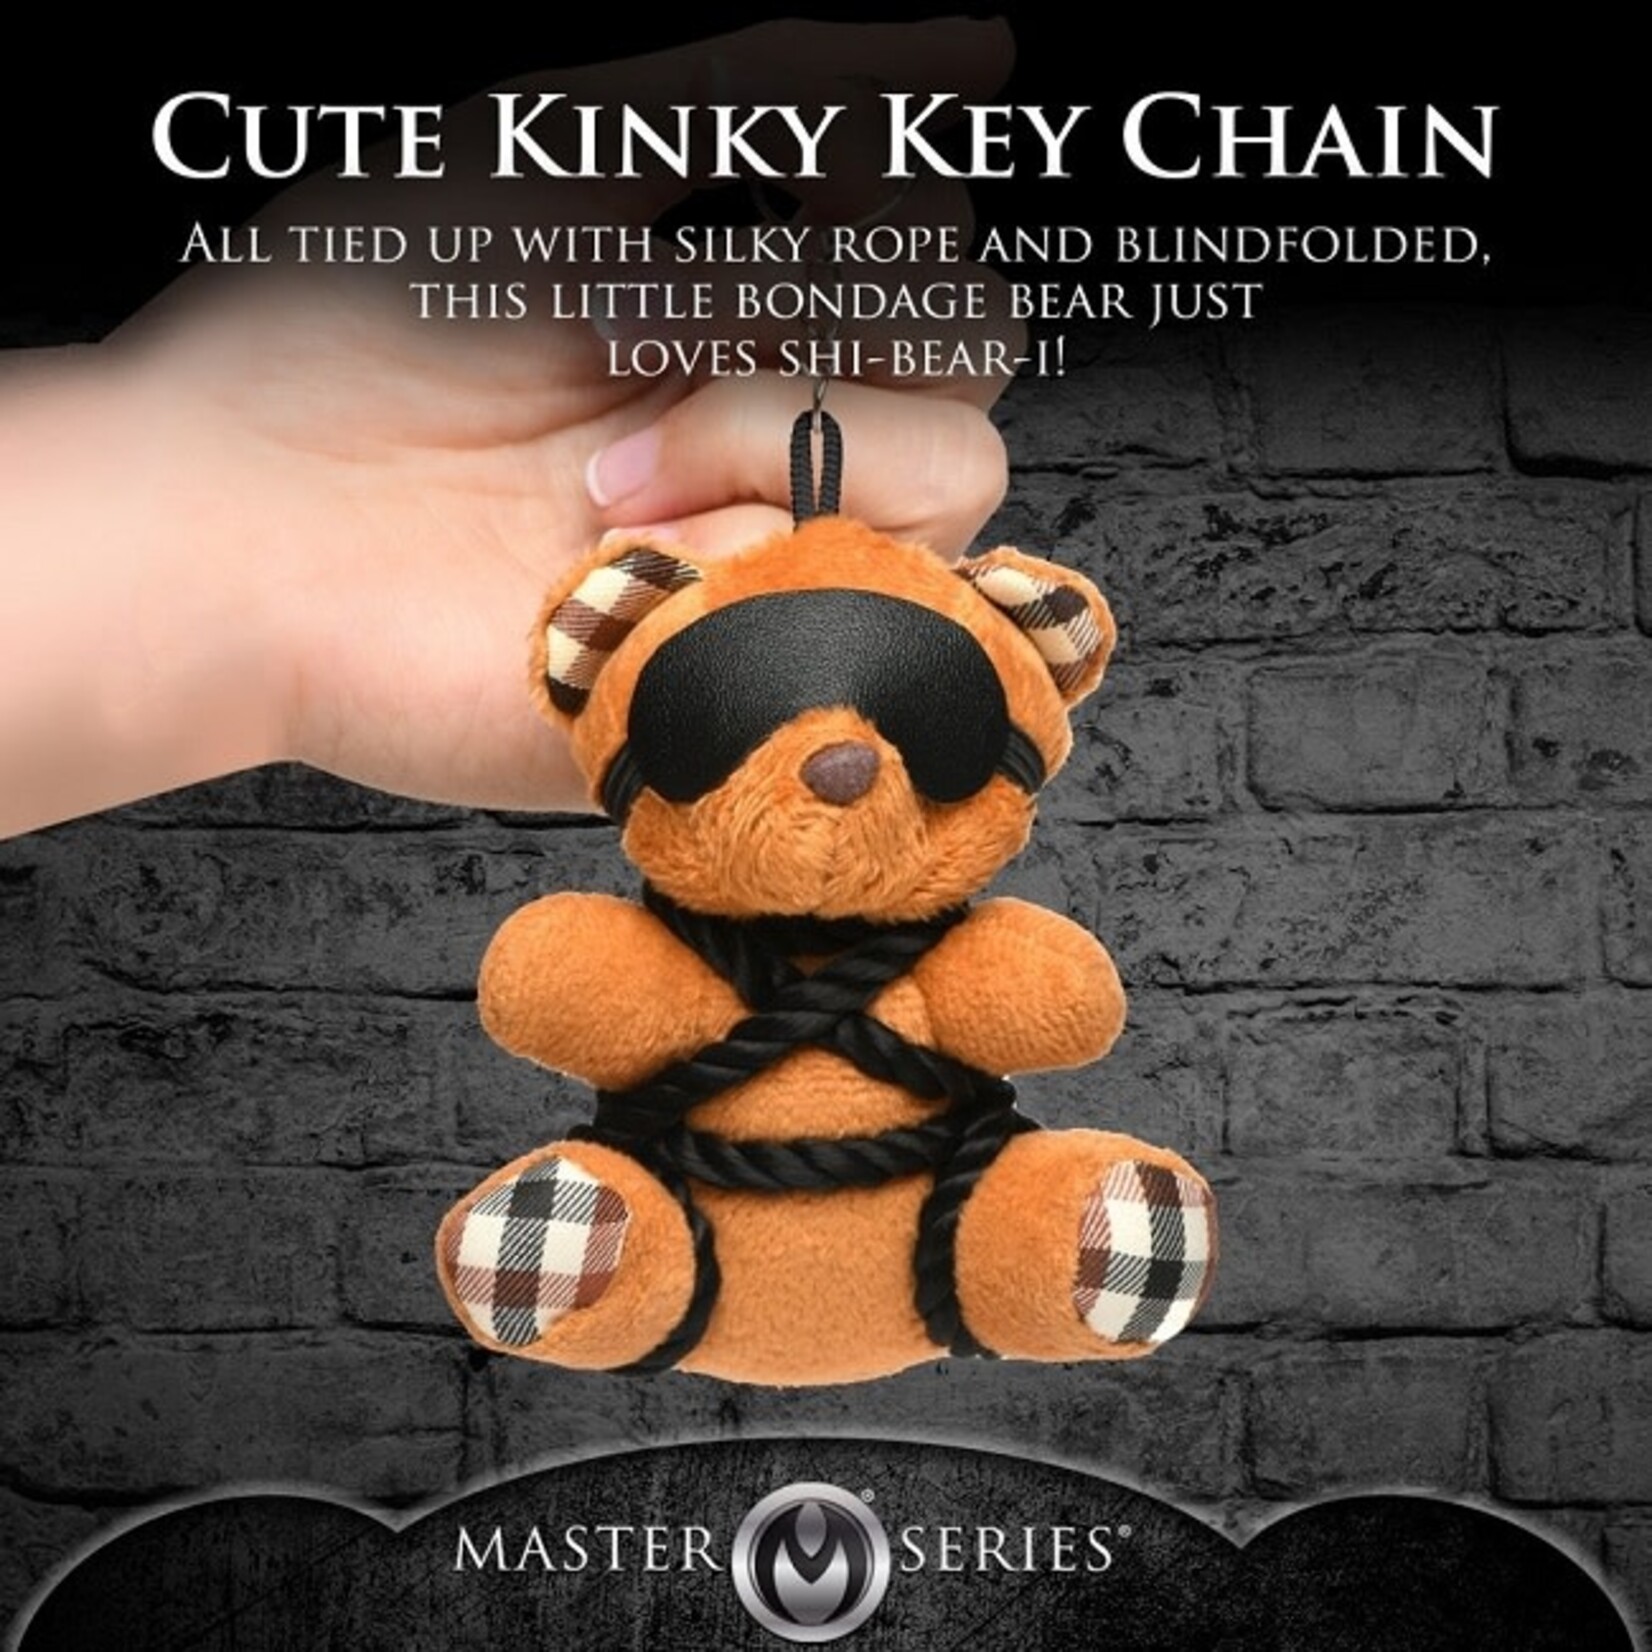 Master Series Master Series ShiBeari Teddy Bear Keychain